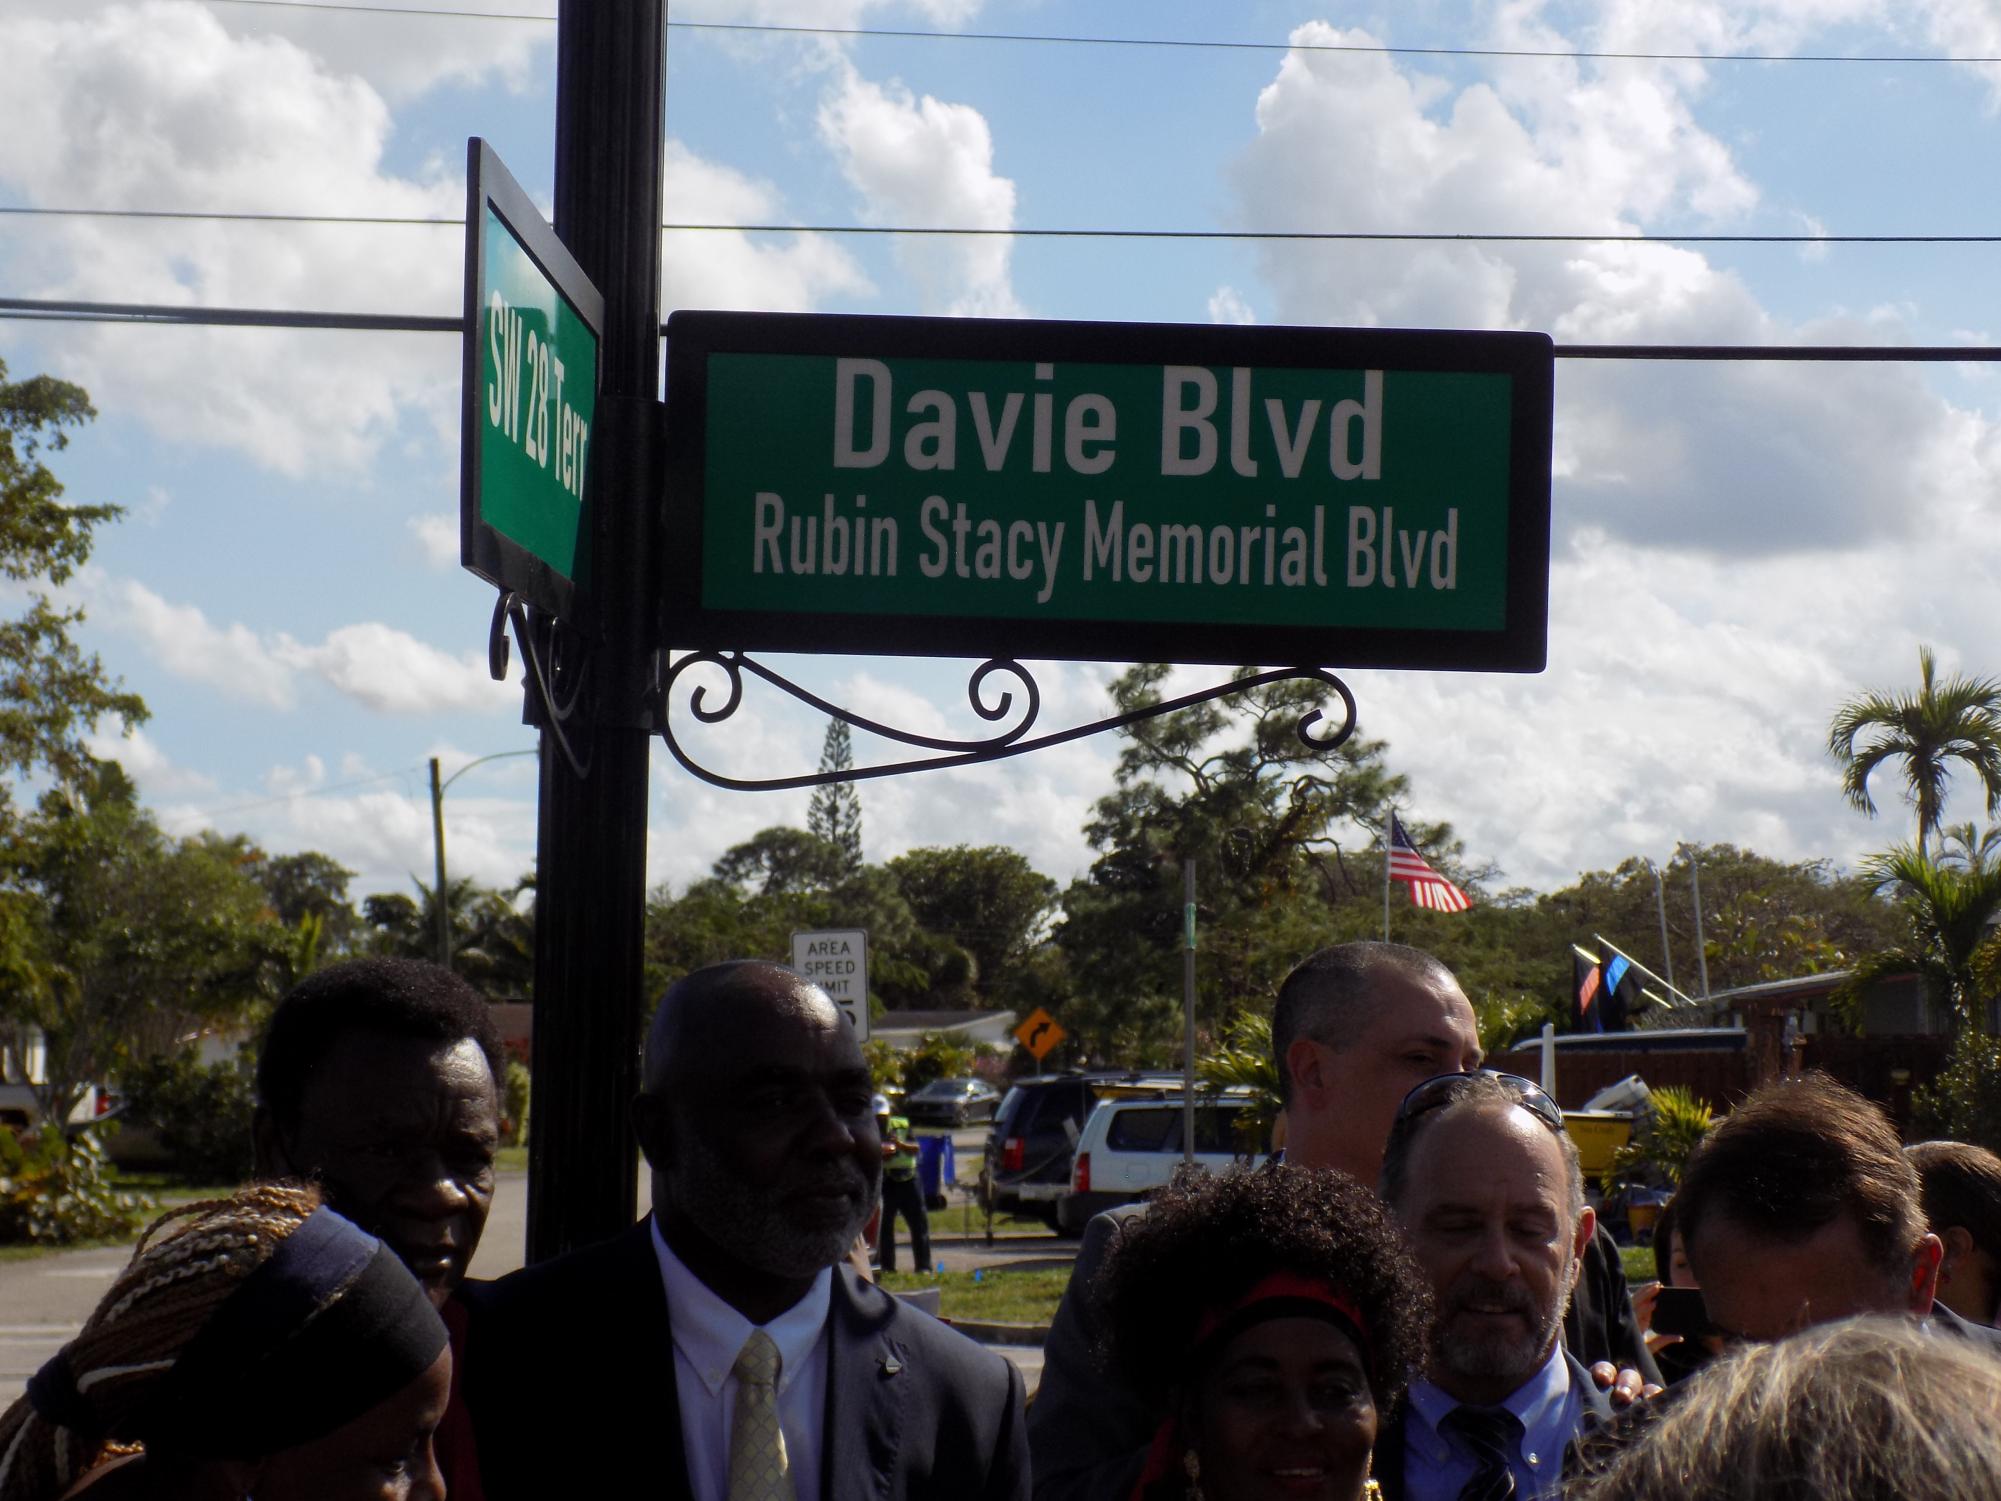 Rubin Stacy Memorial Boulevard